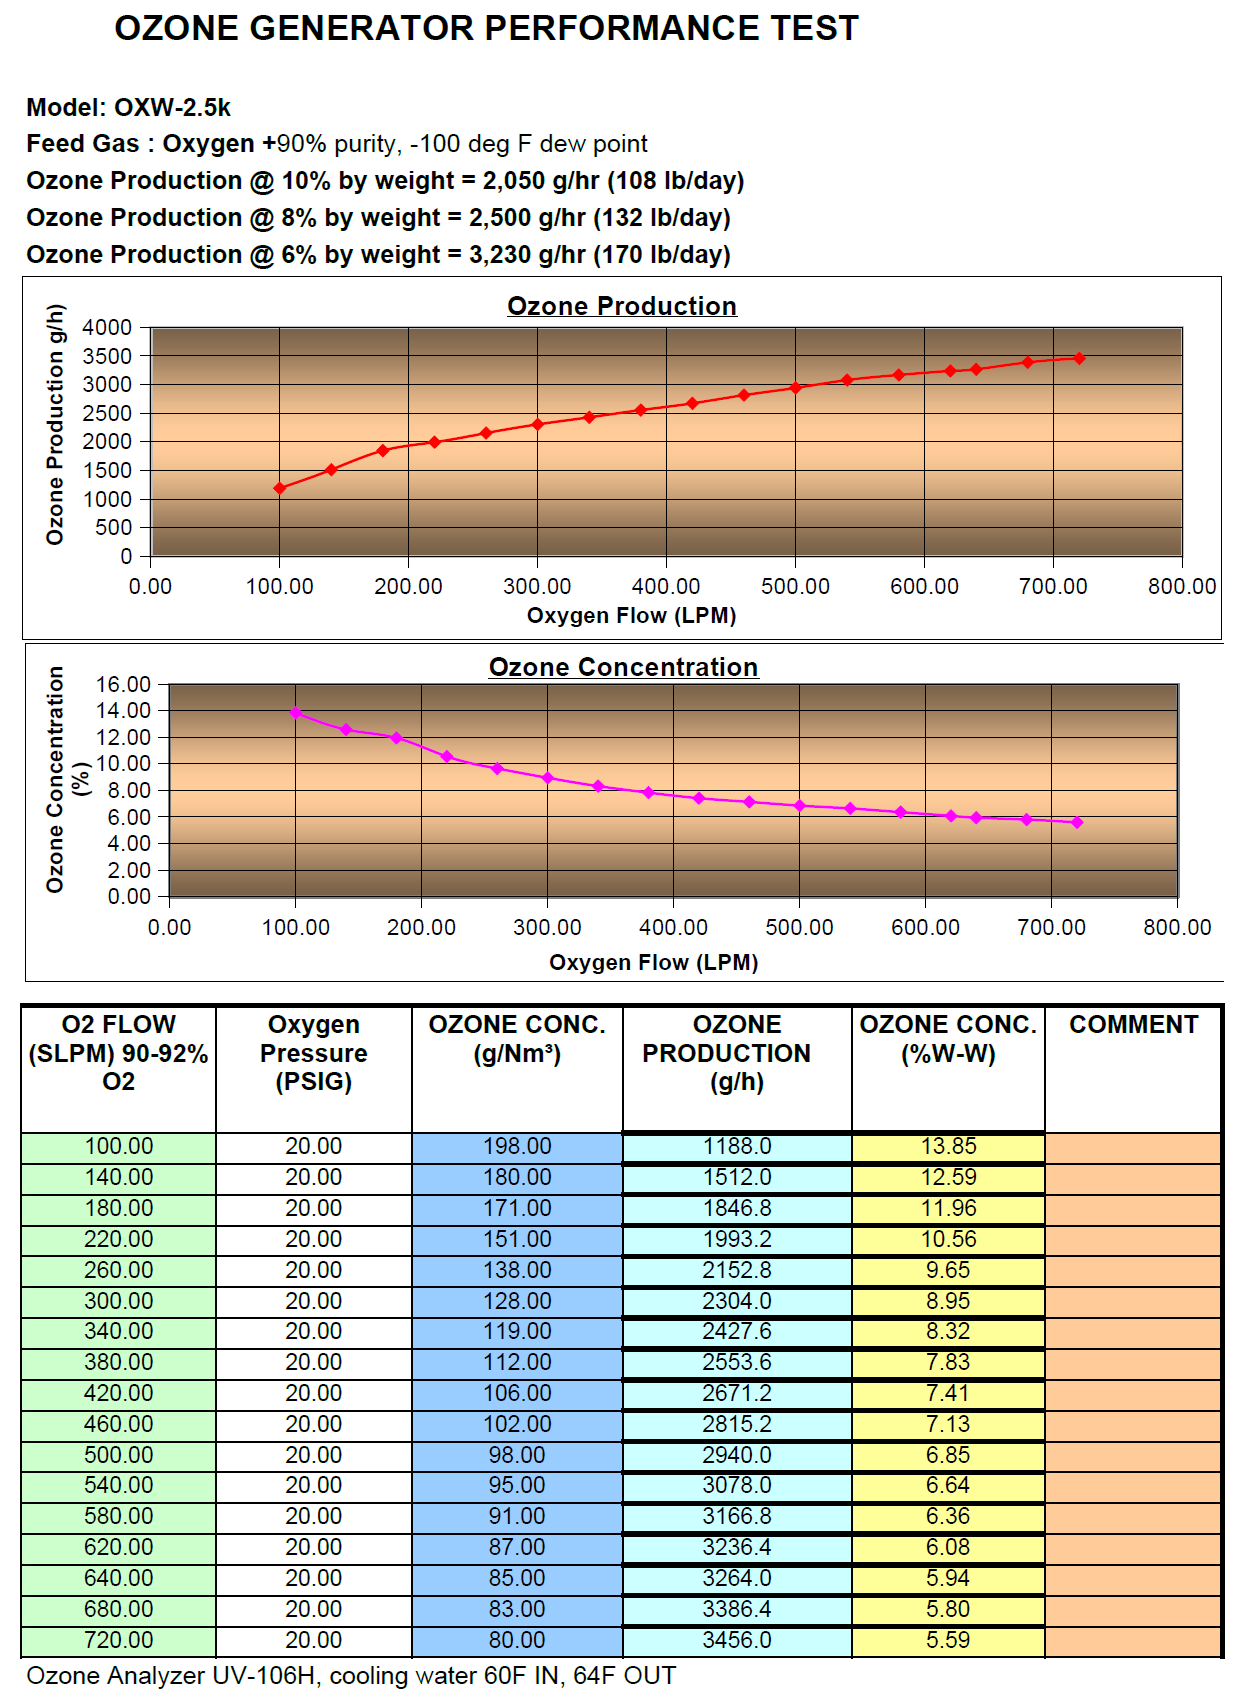 OXW-2.5k Ozone generator output chart